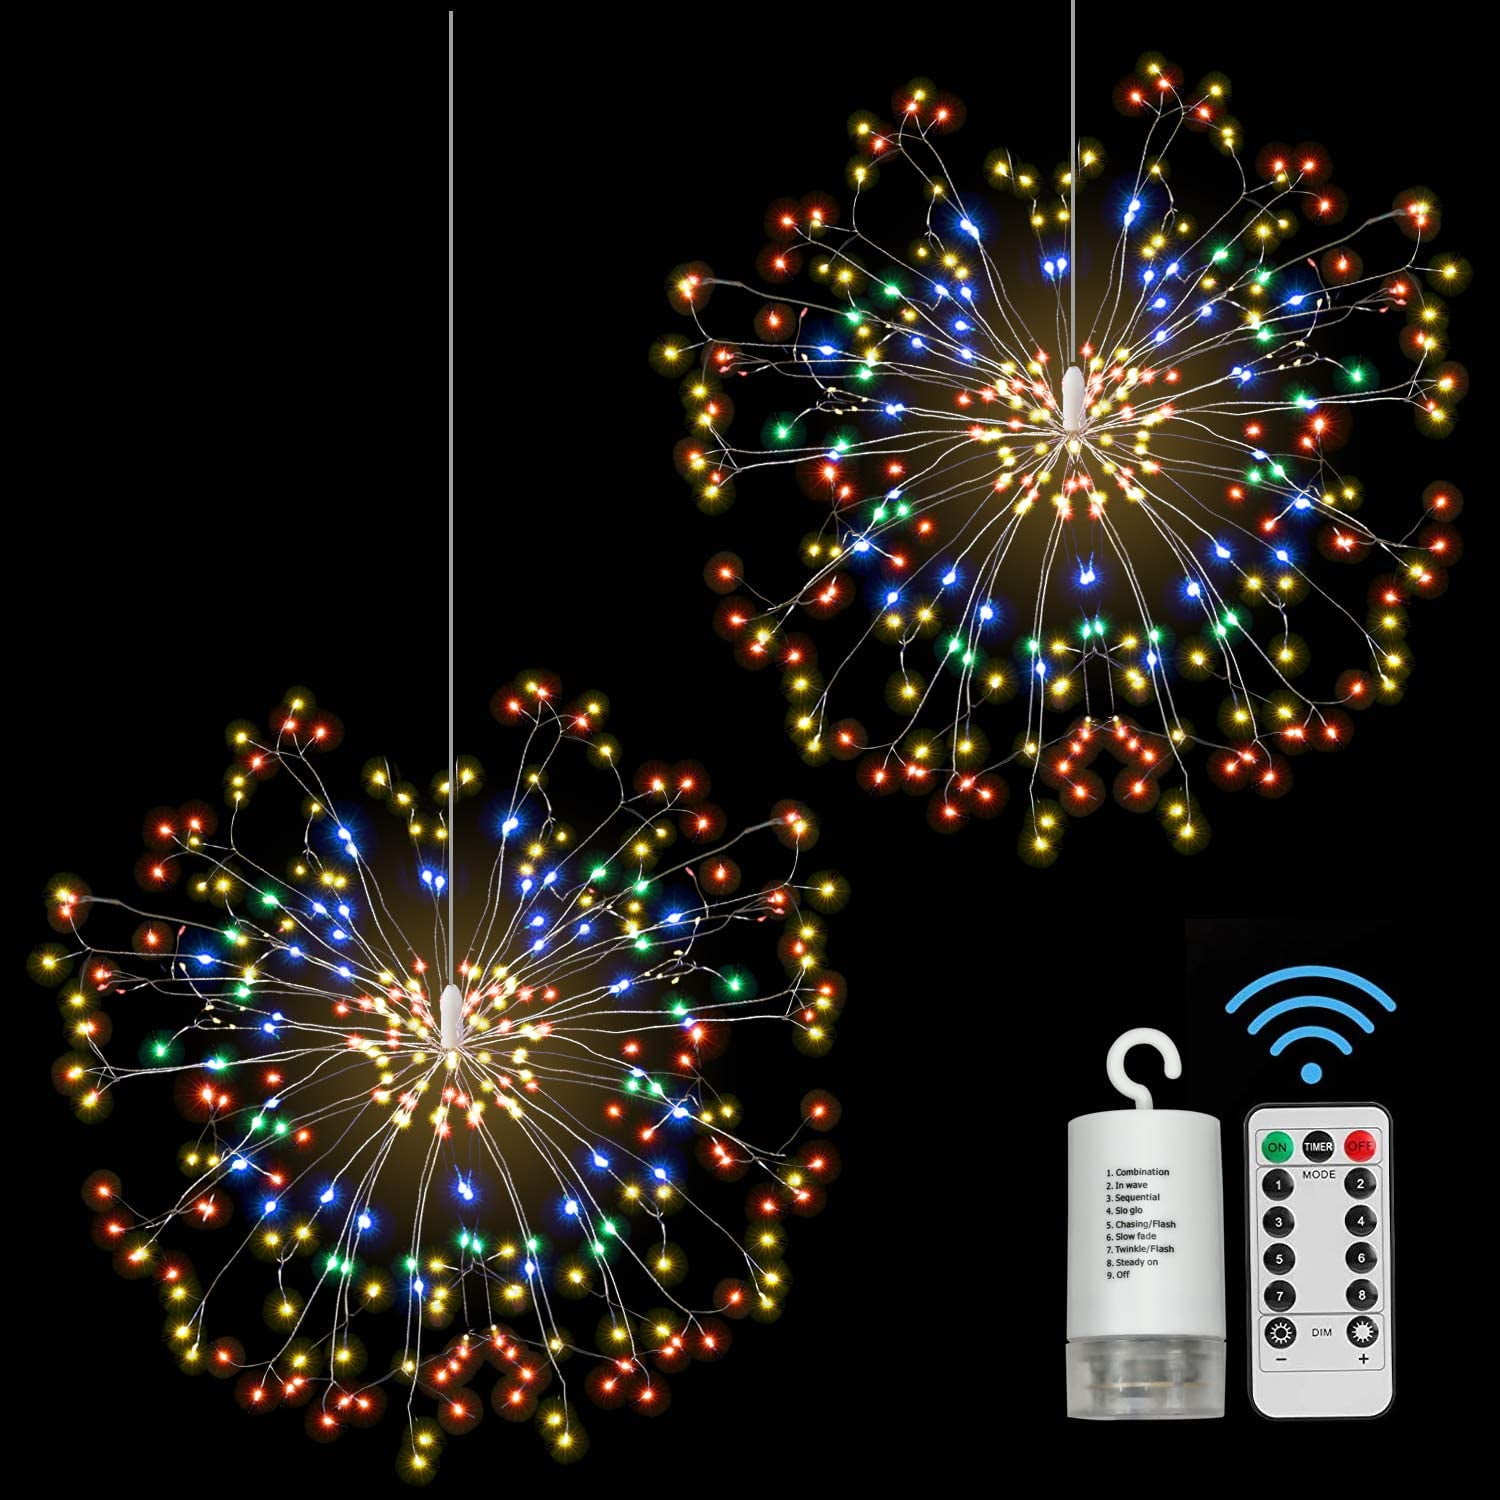 Details about   LED Lights Firework Starbust Dandelion 120Leds Flashing Lamp Holiday Decor Gift 